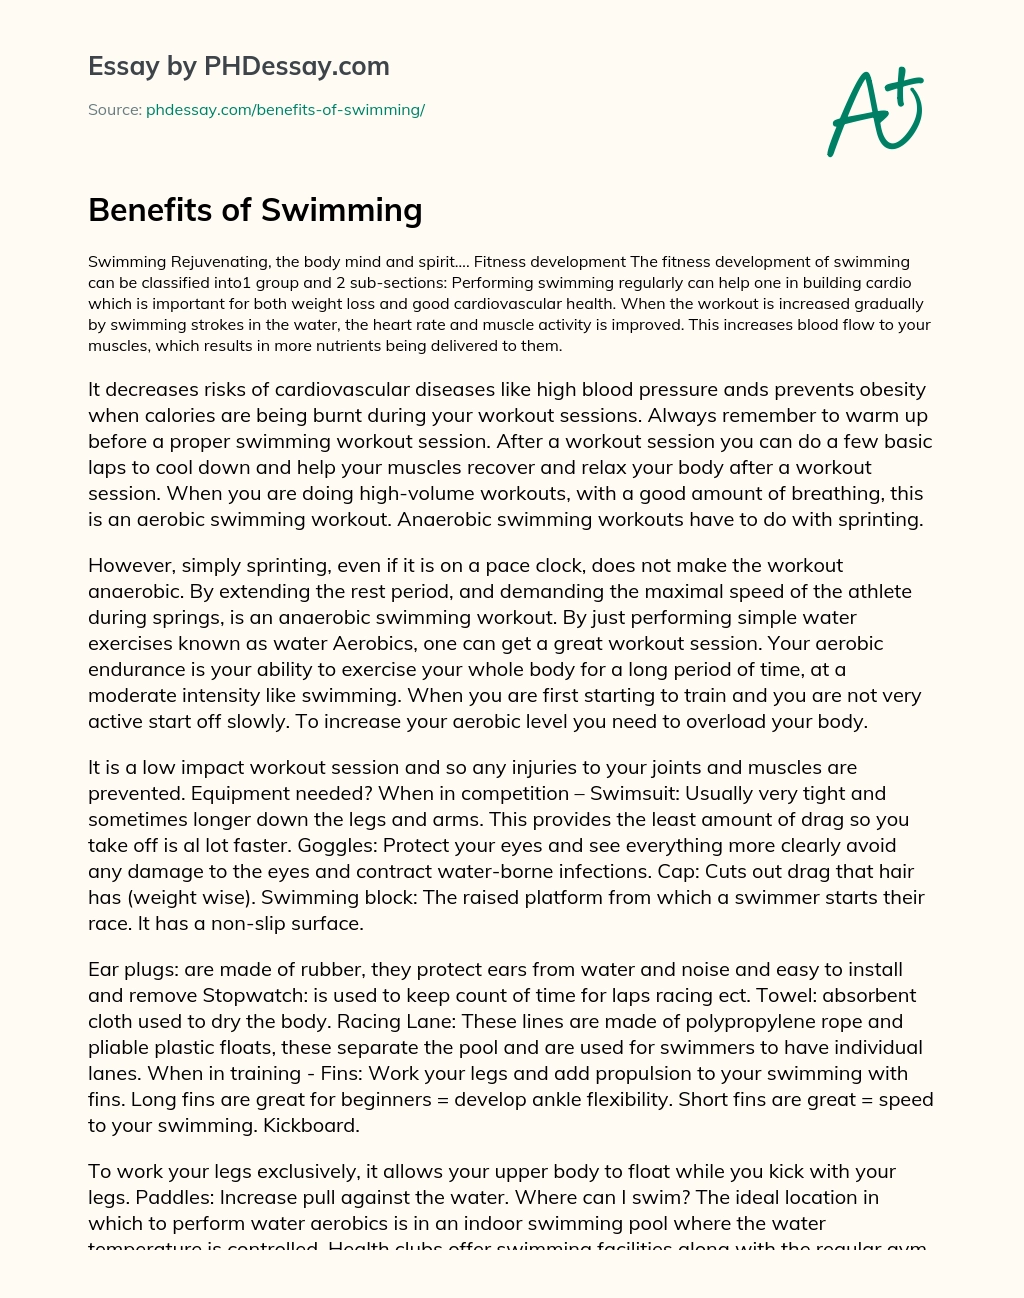 Benefits of Swimming essay